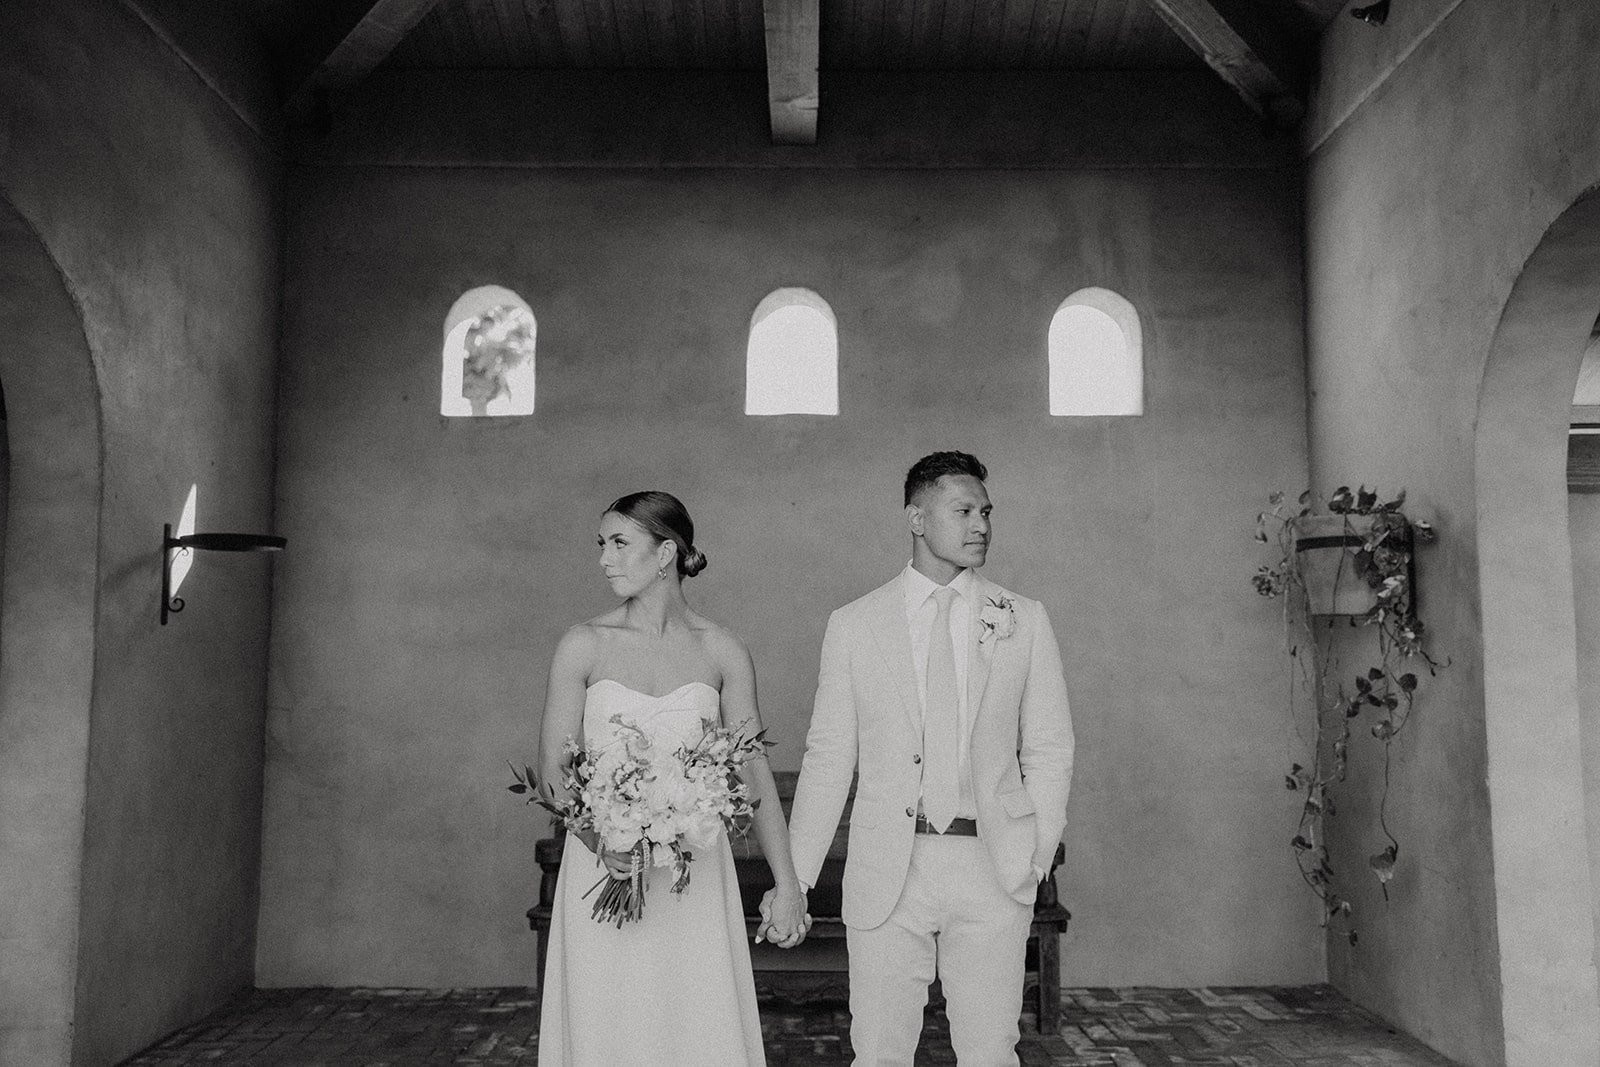 Bride and groom hold hands during wedding photos at luxury resort wedding venue in Arizona